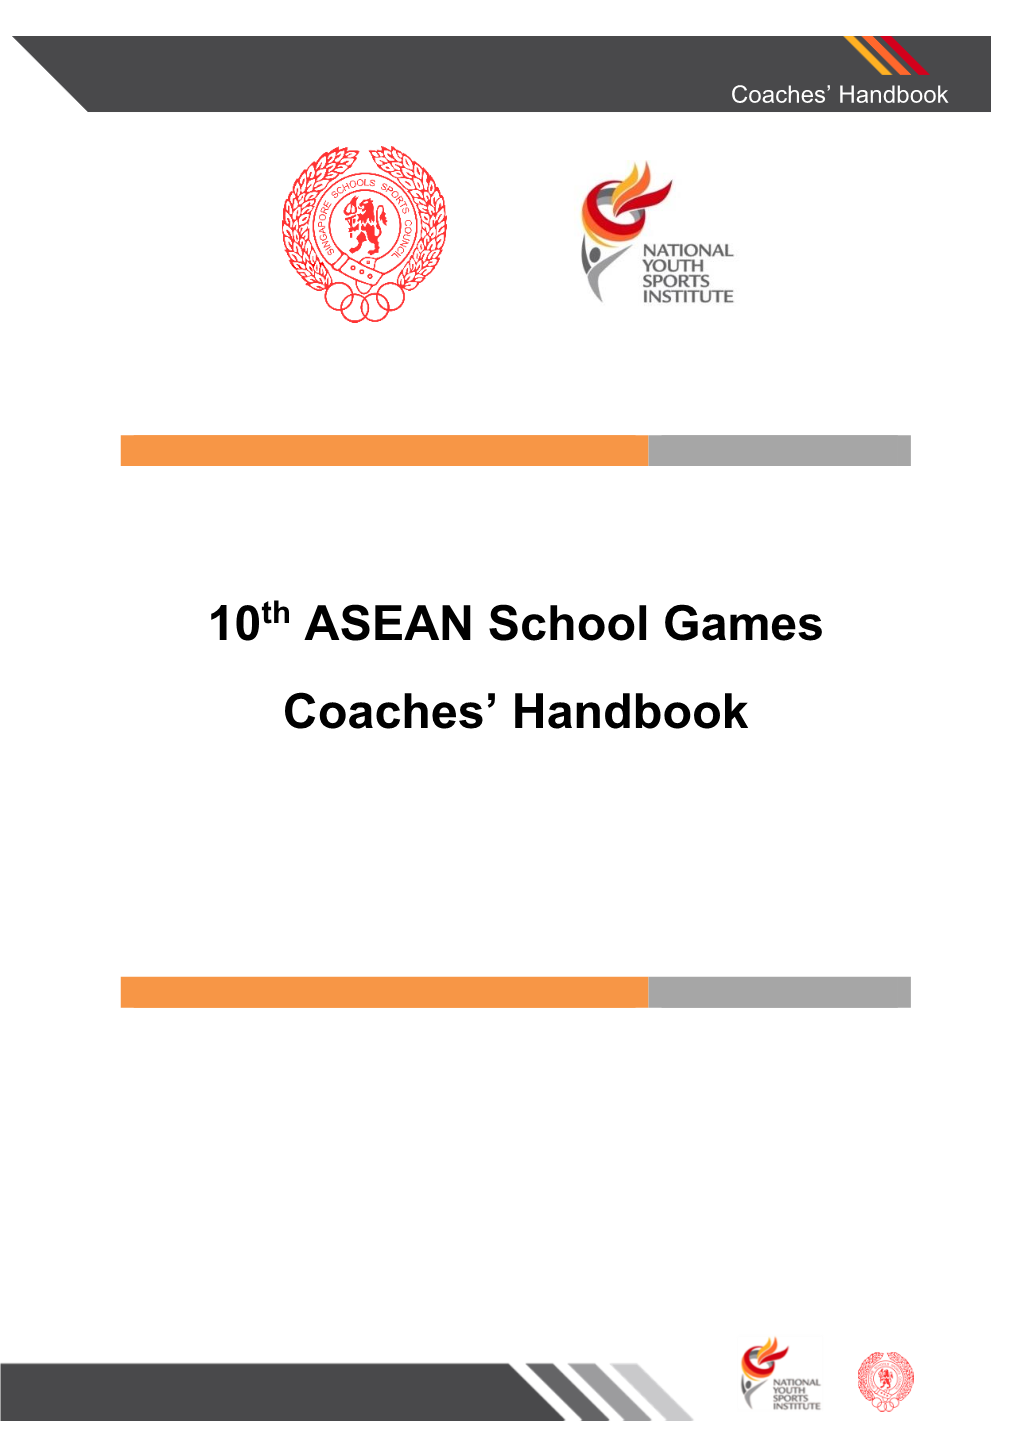 ASEAN School Games